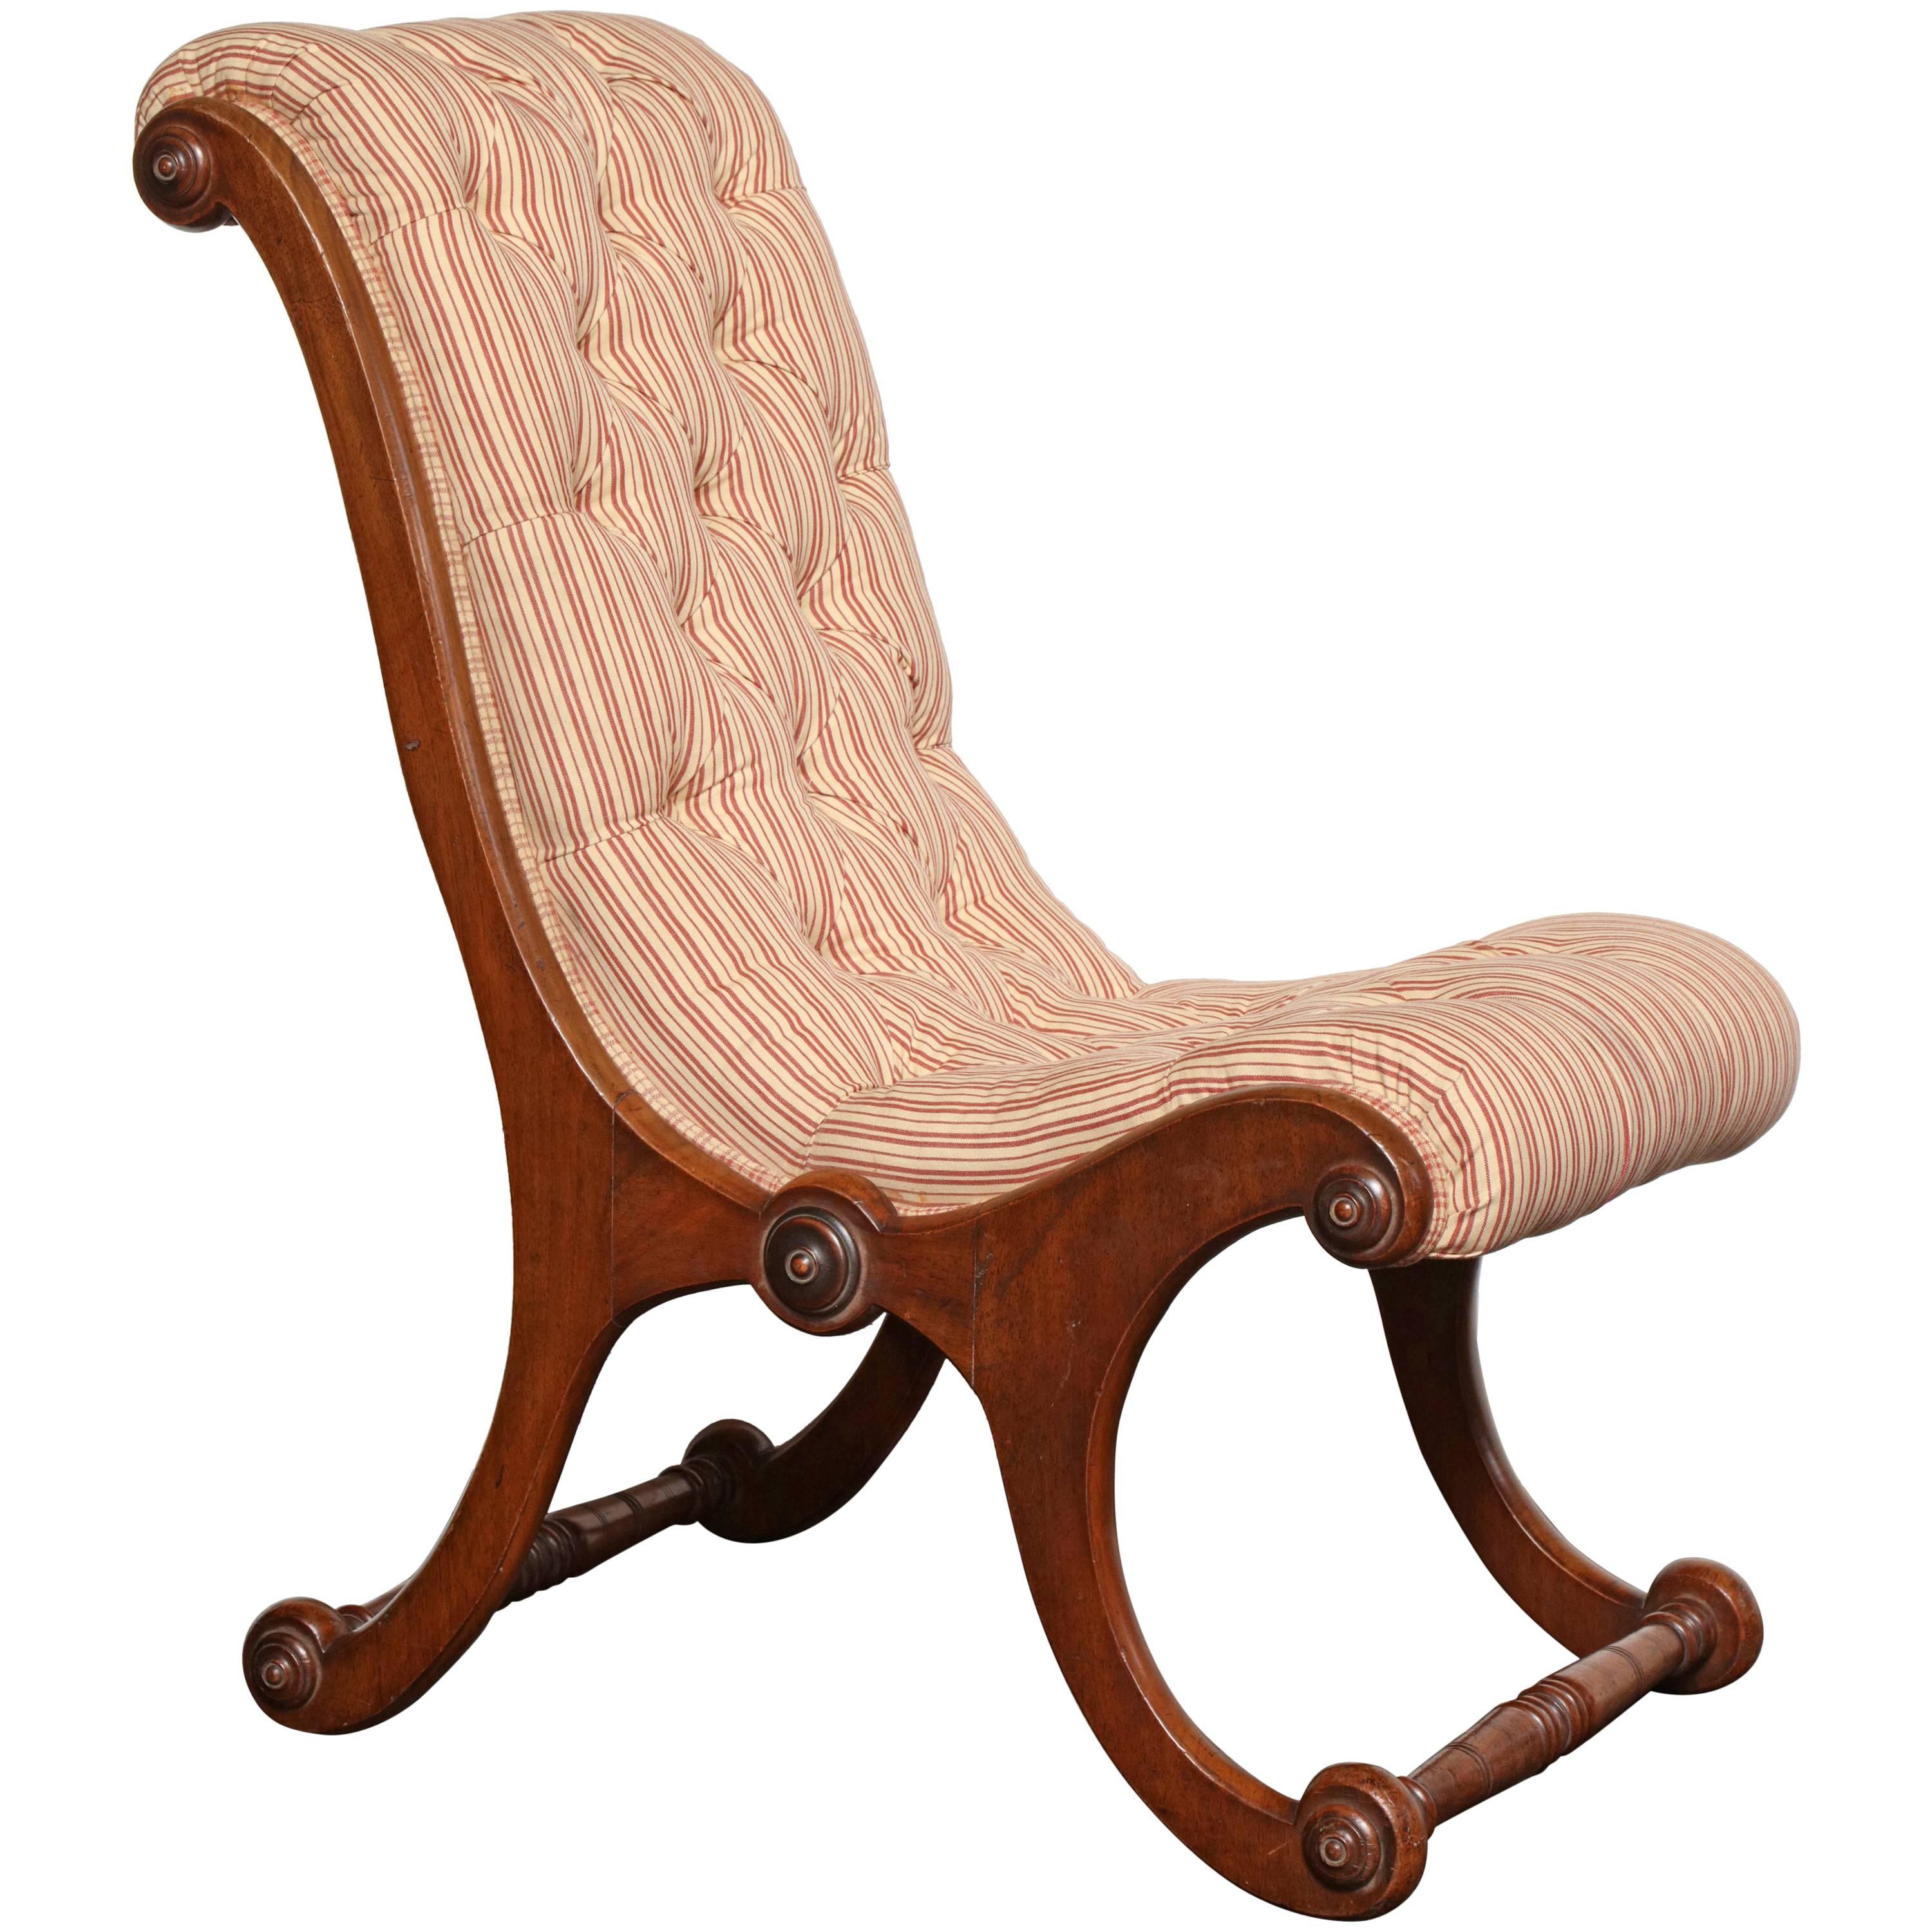 Mid-19th Century English, Mahogany Slipper Chair